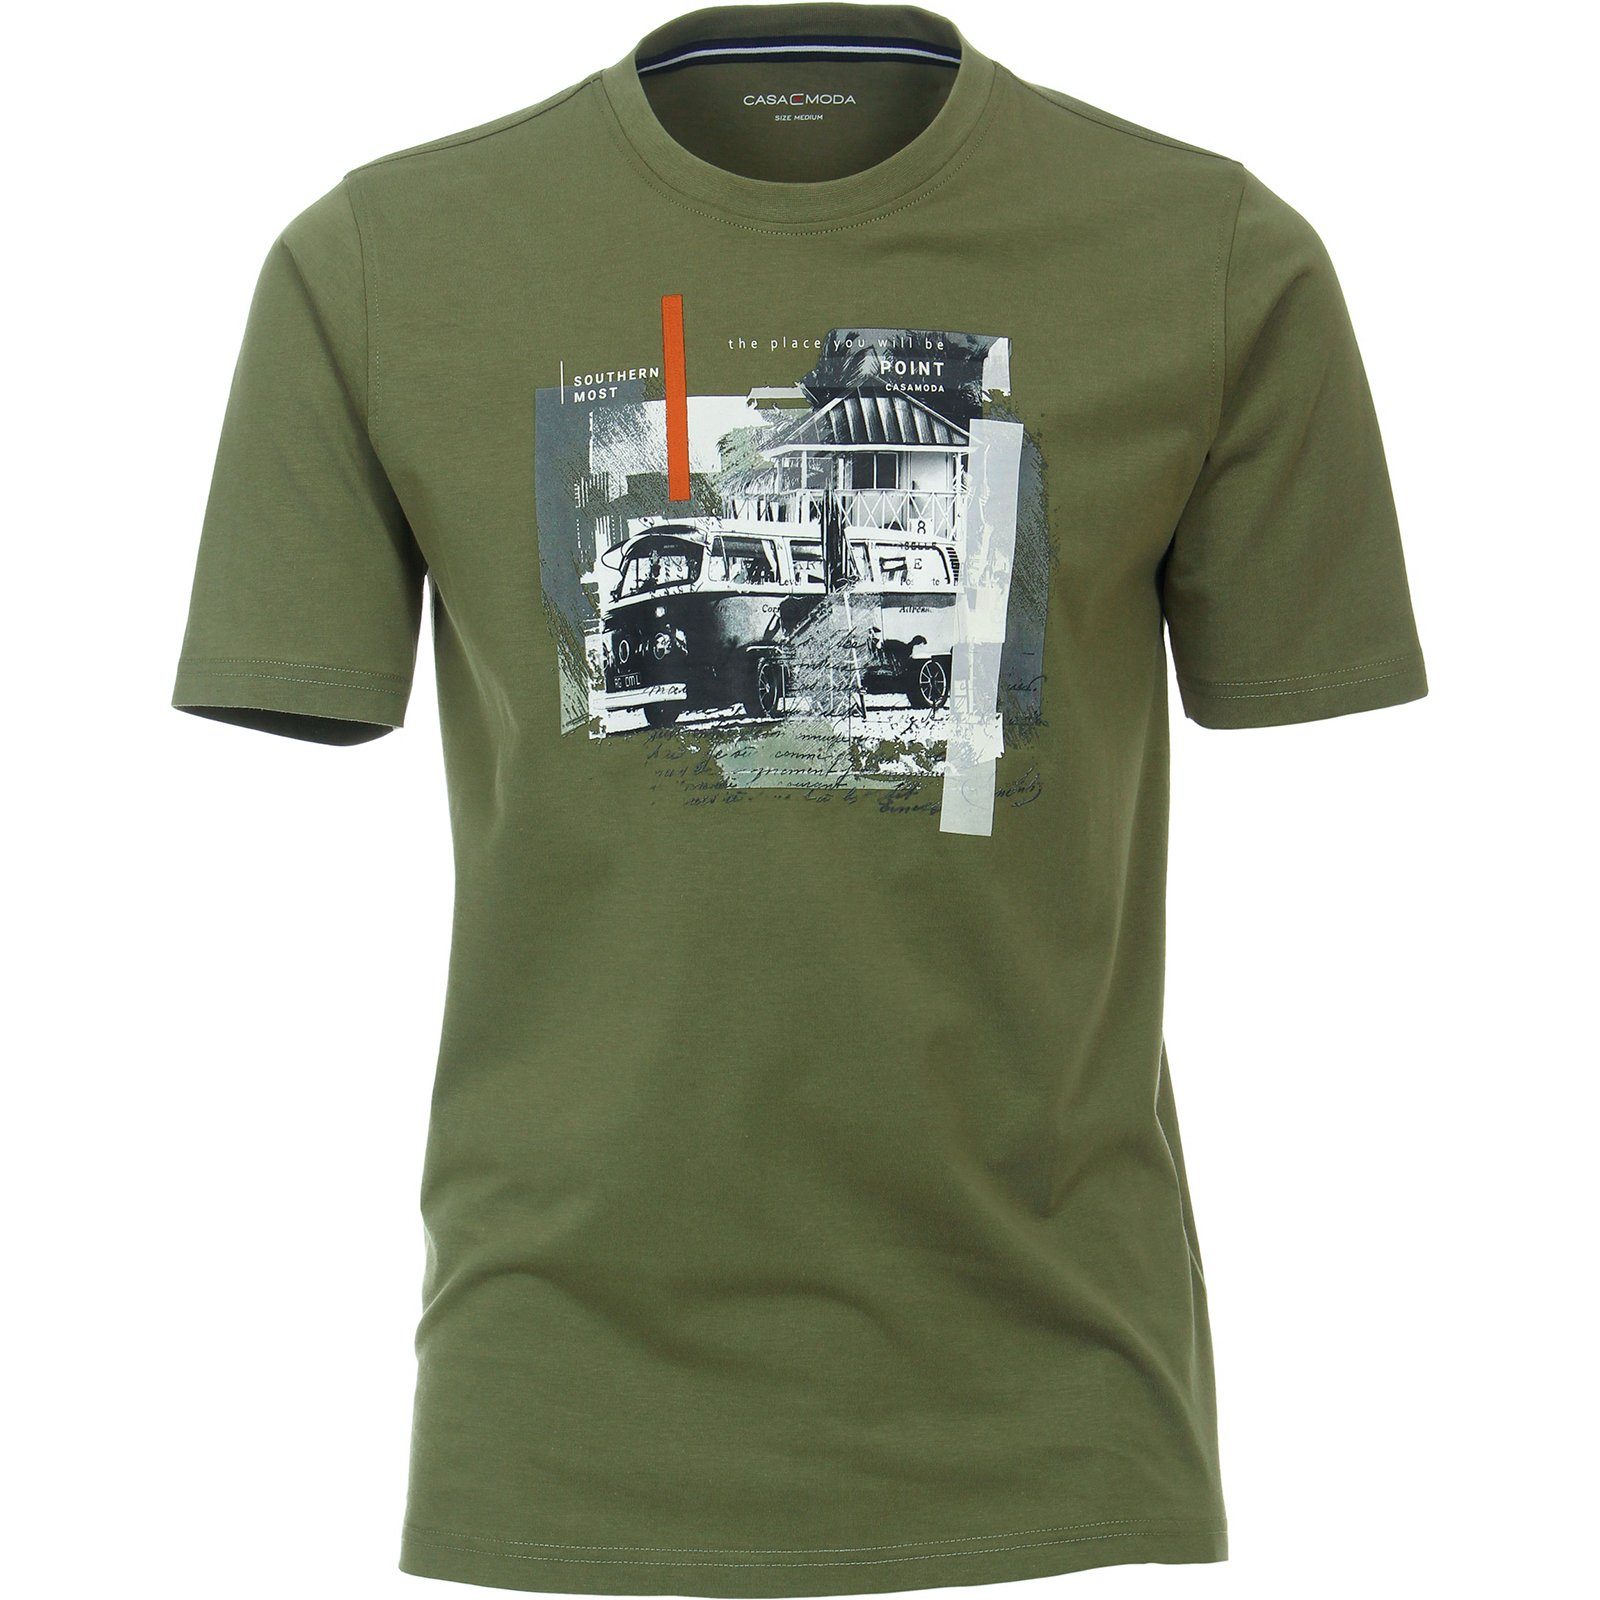 Rundhalsshirt olivgrün Florida-Print CASAMODA Herren T-Shirt Große CasaModa Größen